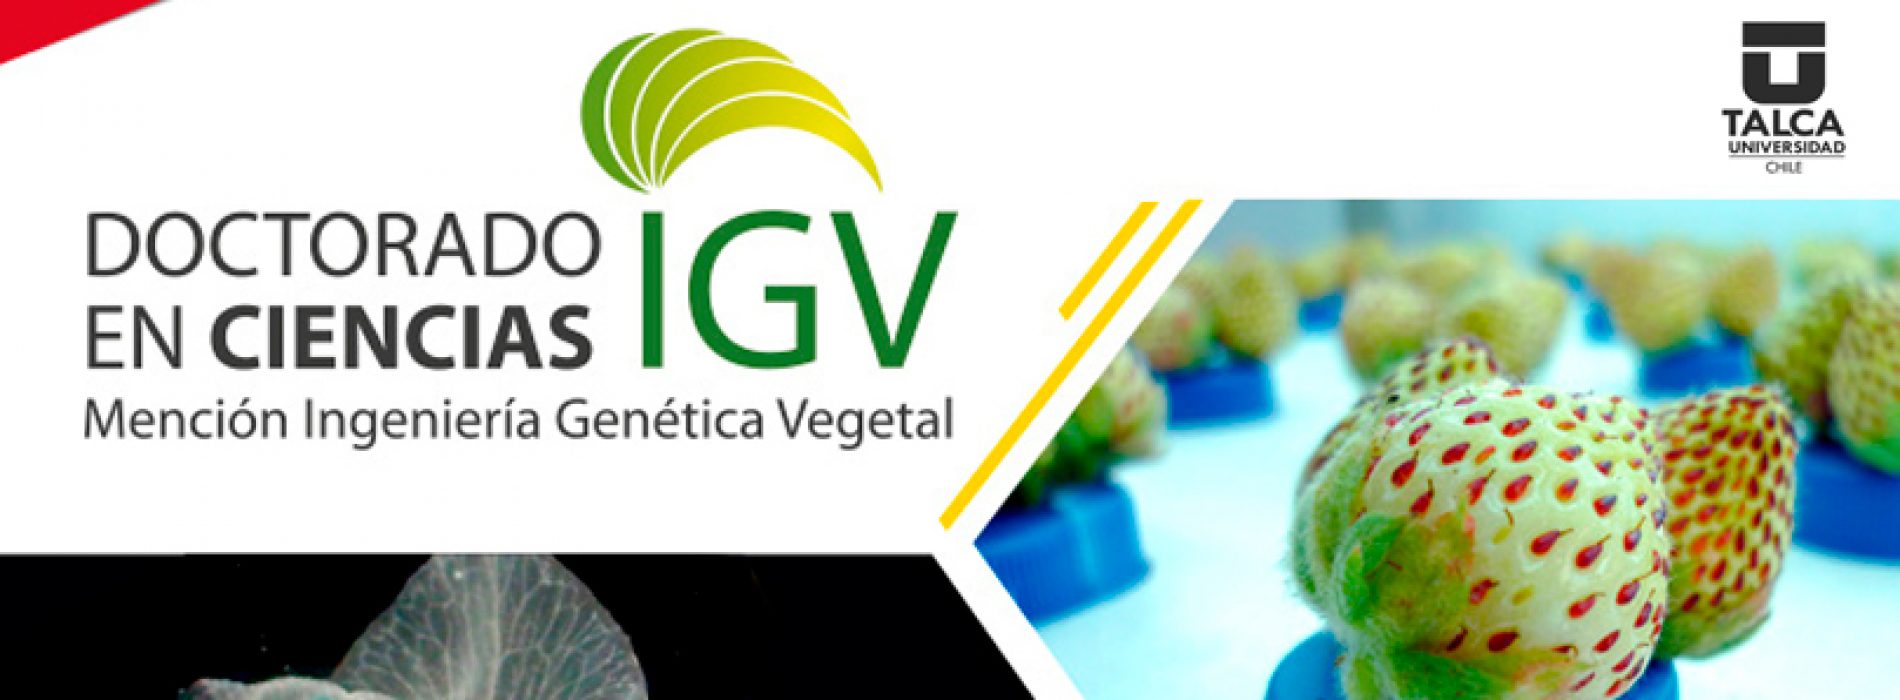 Doctorate in Sciences mention of plant genetic engineering - Universidad de Talca